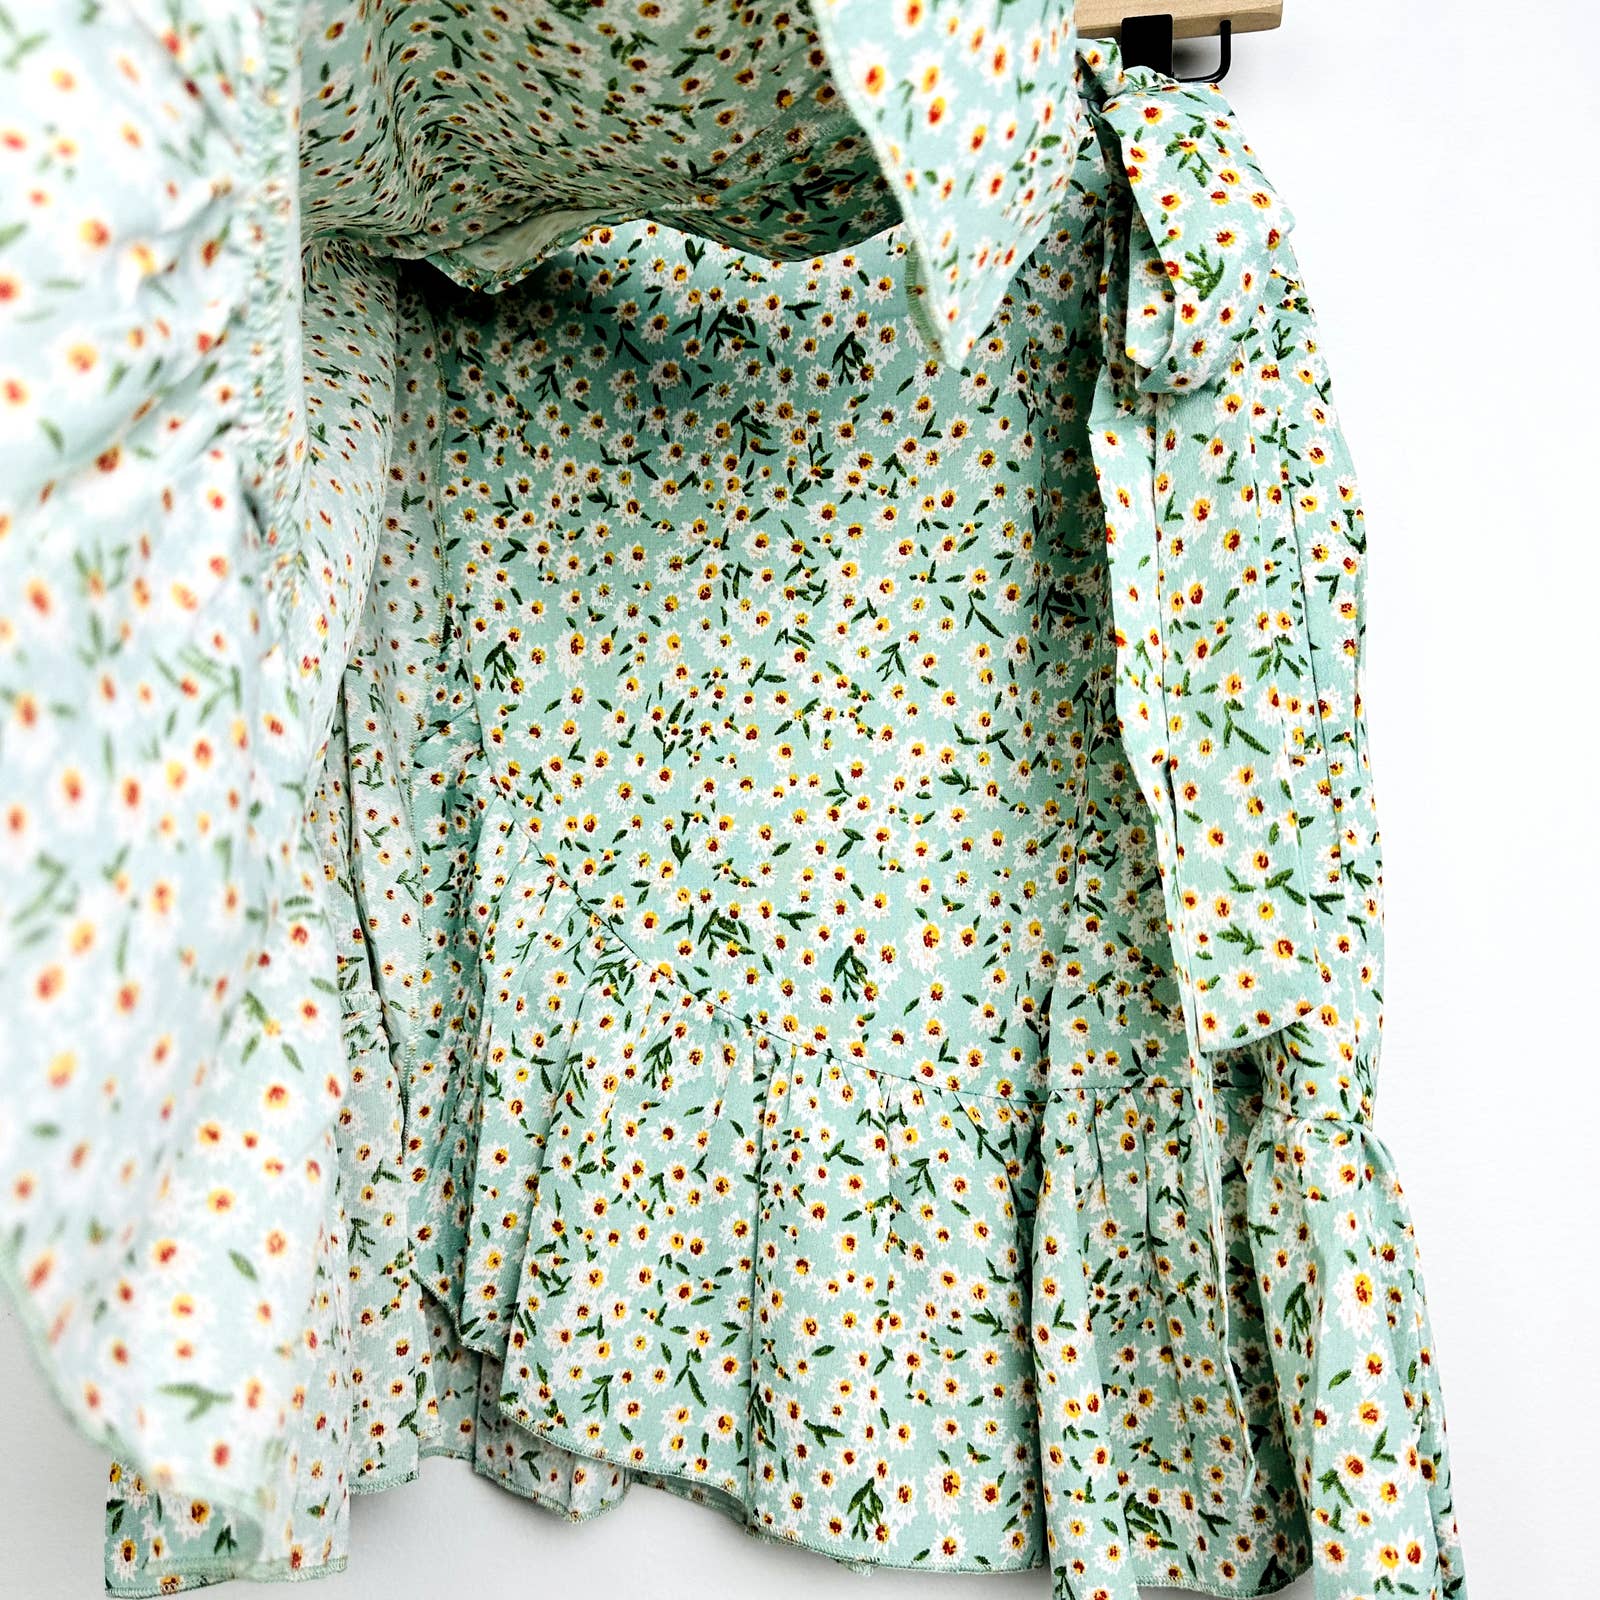 Lulus NWT Flourishing Dreams Ditsy Floral Print Wrap Mini Skirt Mint Green